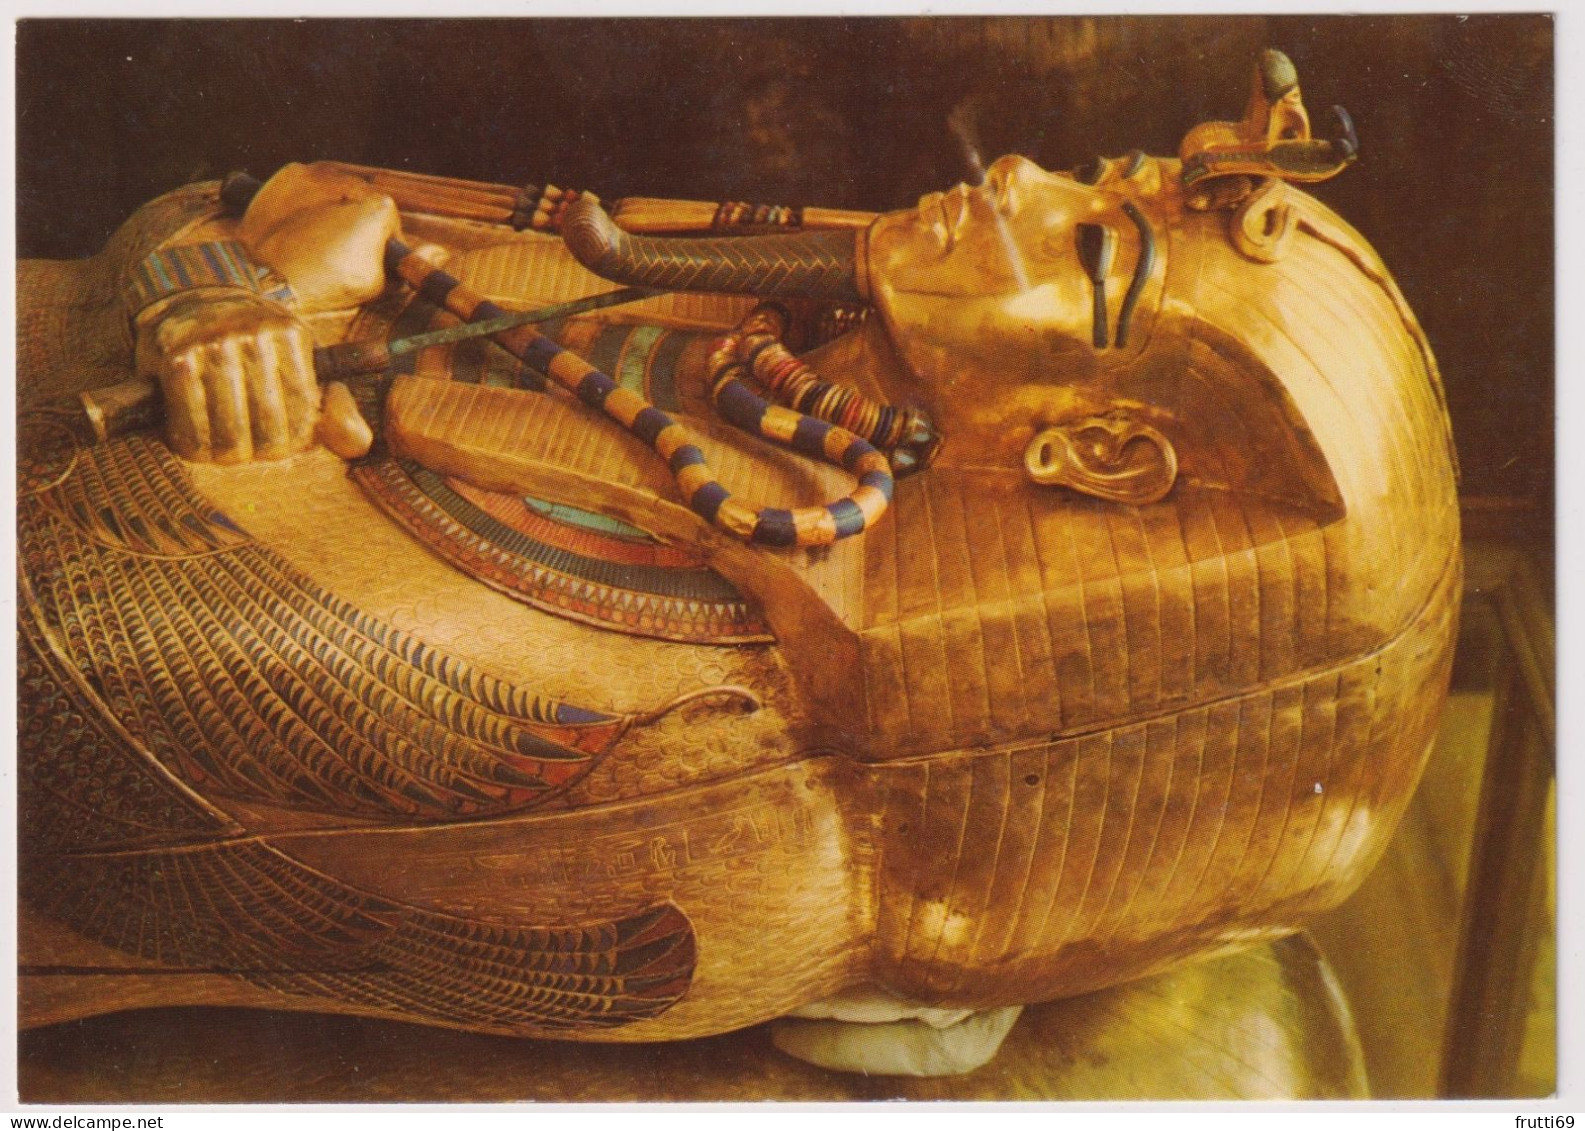 AK 198144 EGYPT - Cairo - Cairo Egyptian Museum - Tut Ankh Amun's Treasures - Second Coffin - Musei